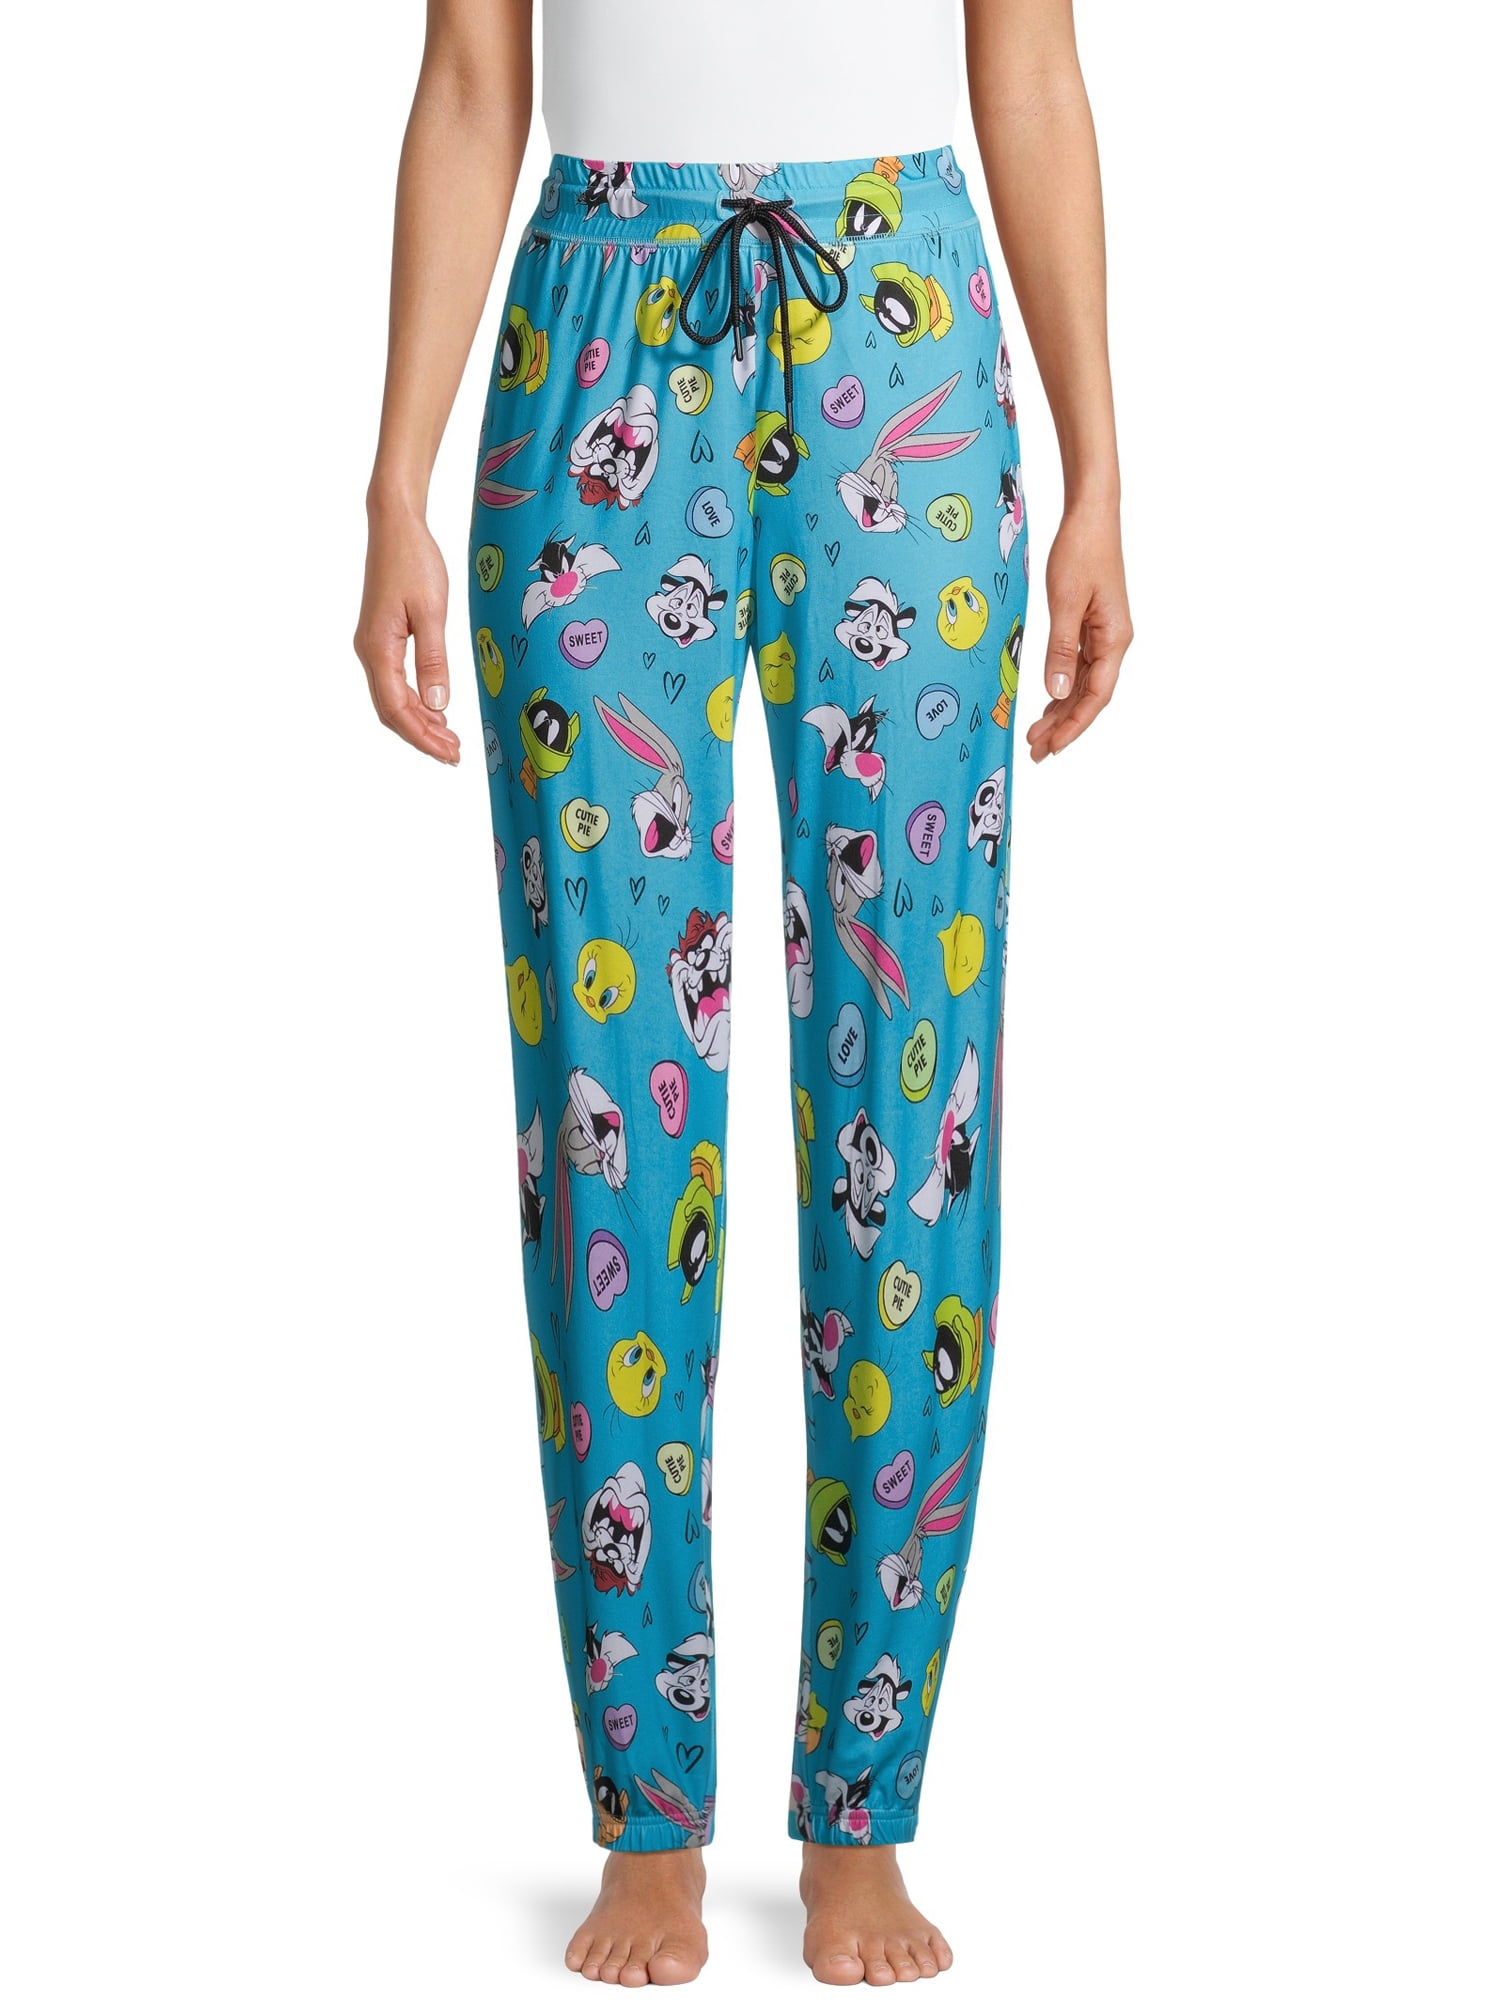 Looney Tunes Bunny Rabbit Day To Night Sleep Pants Pajamas (Women's or ...